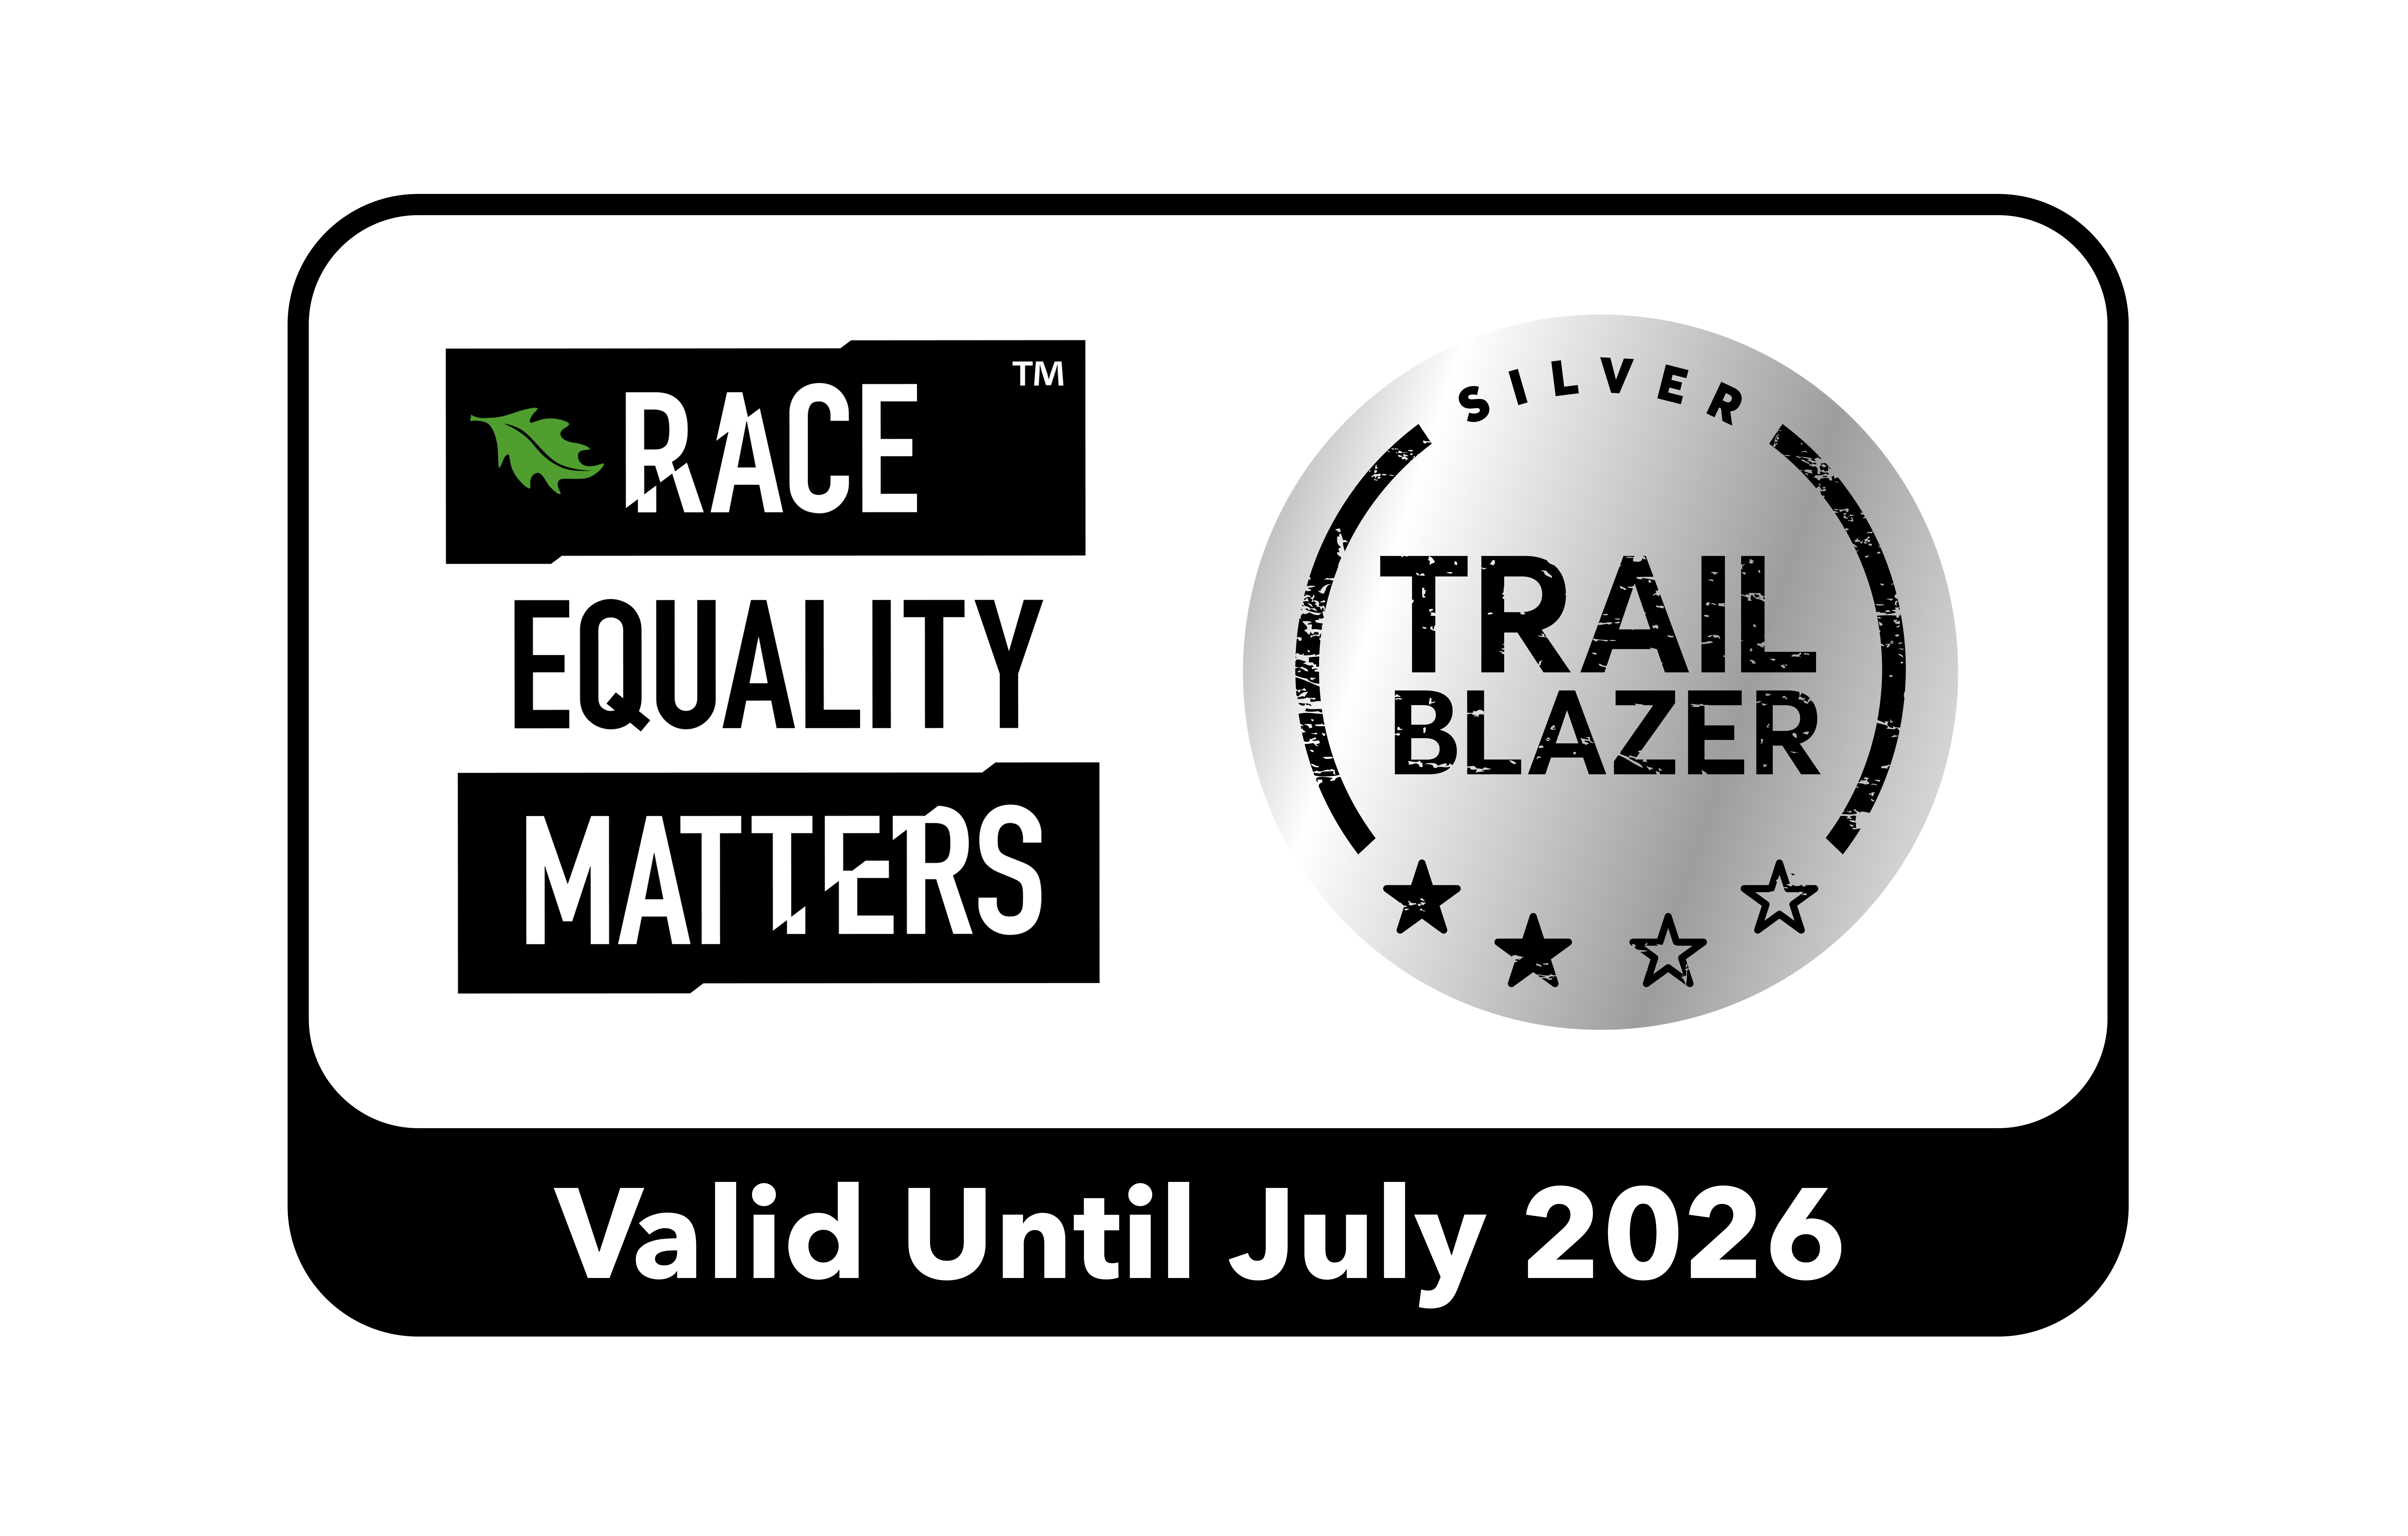 Race Equality Matters, REM, Silver trailblazer status, award